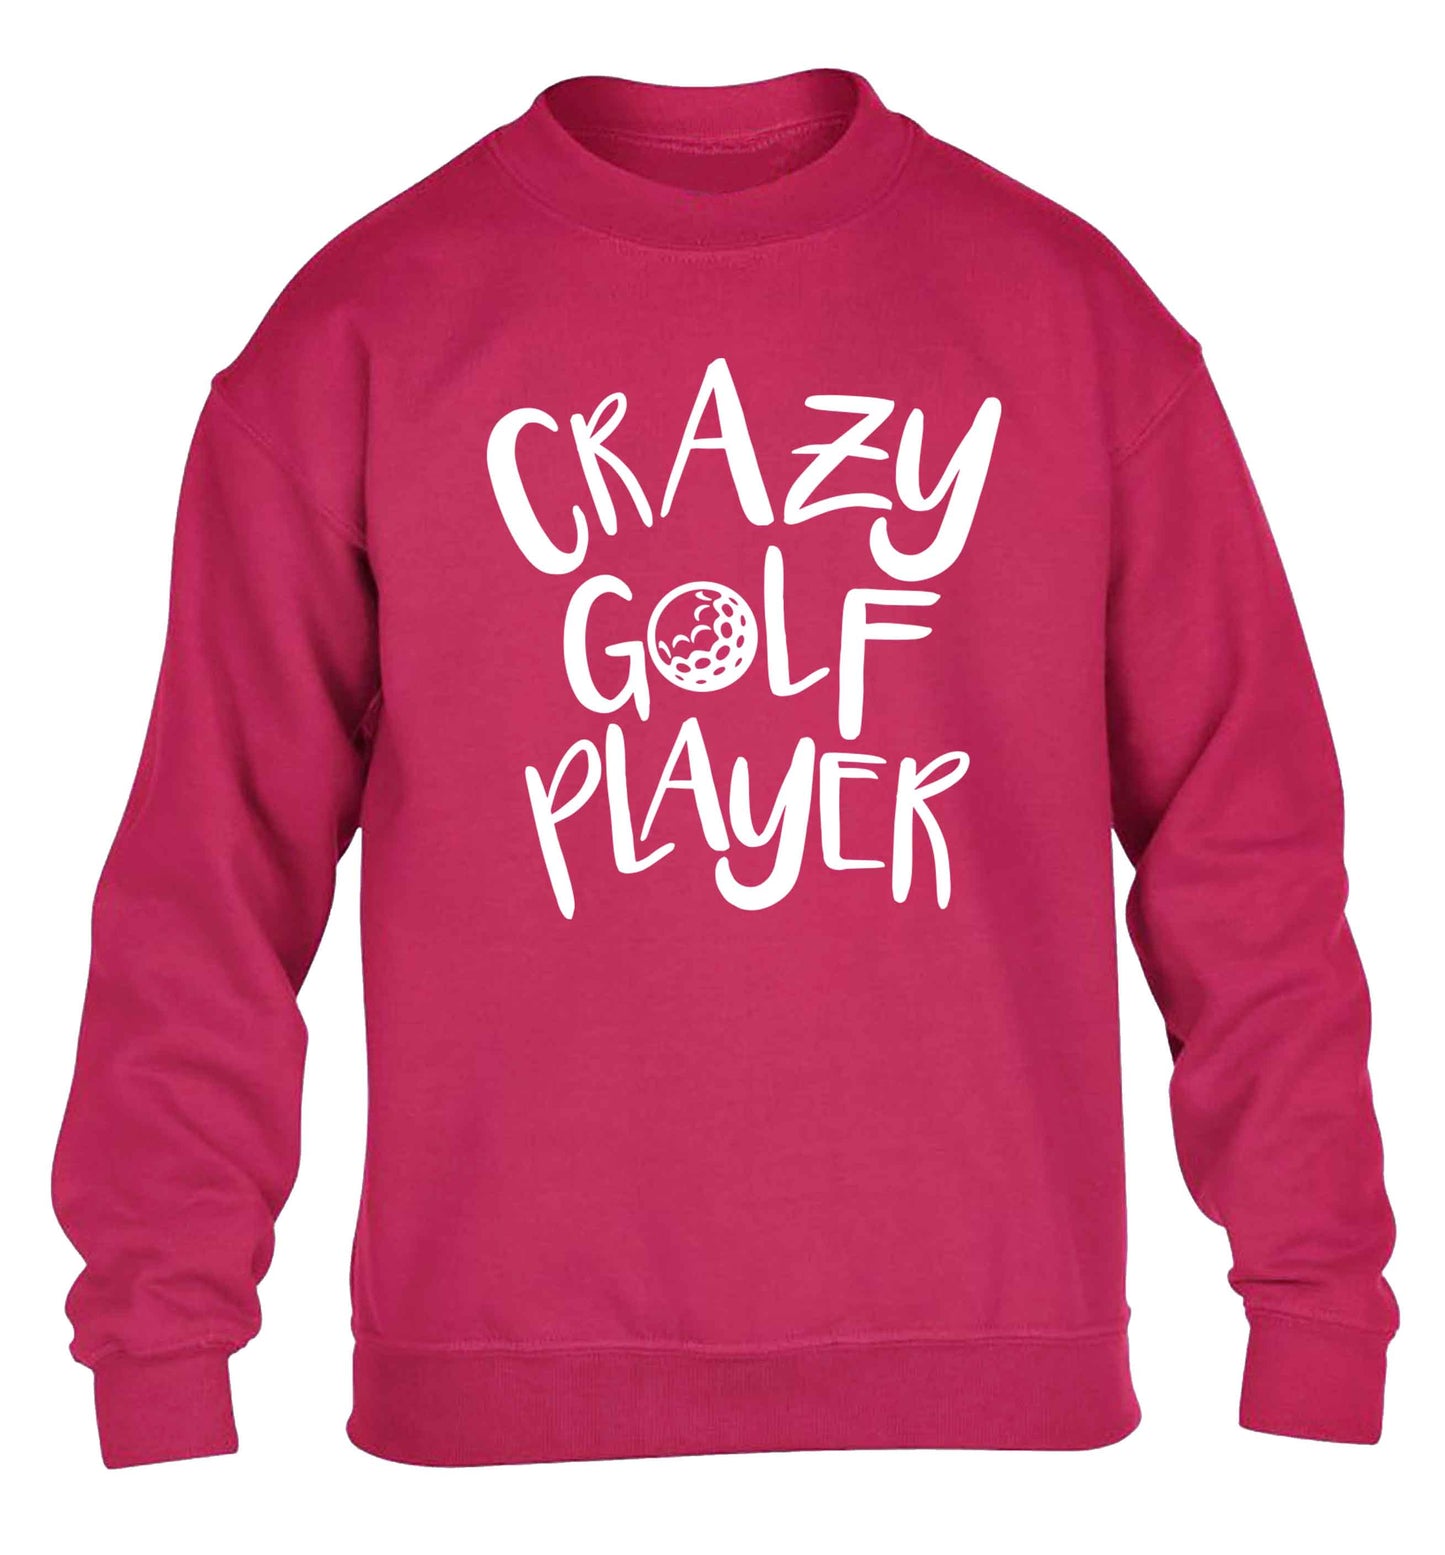 Crazy golf player children's pink sweater 12-13 Years